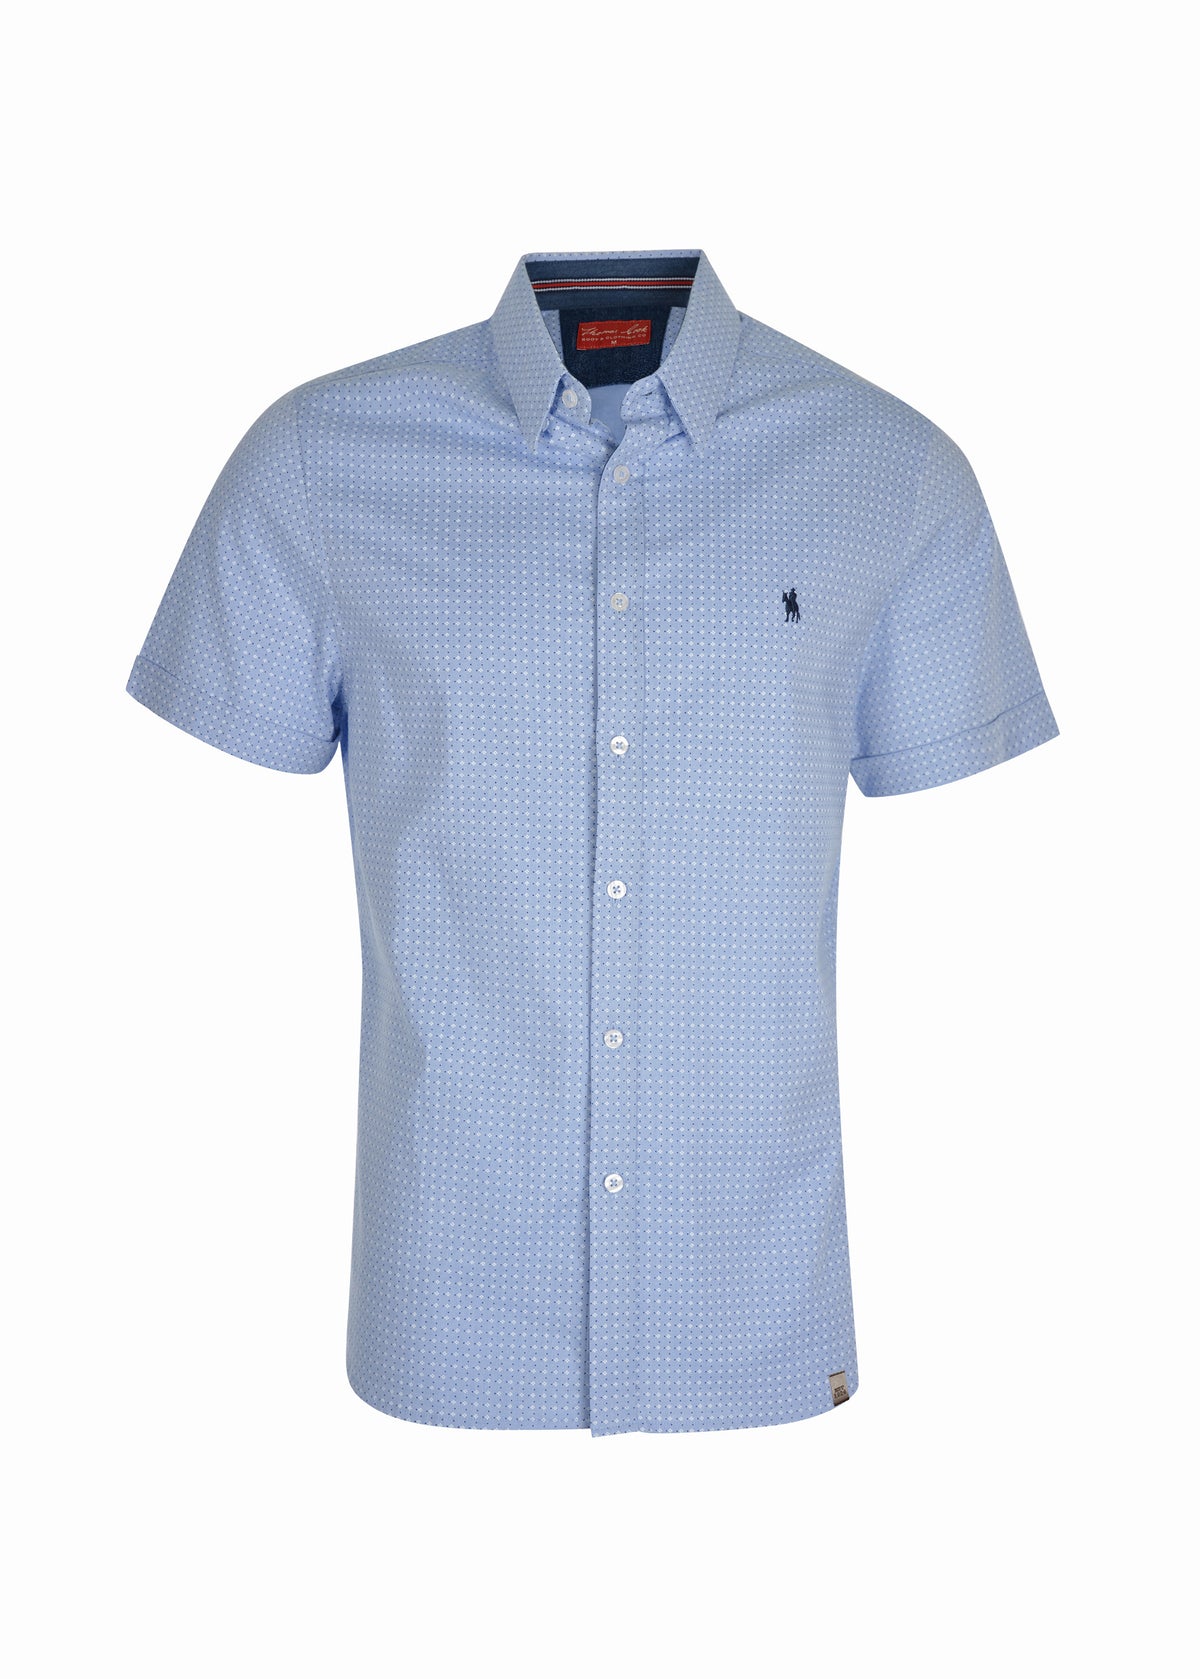 Thomas Cook Mens Adams Tailored Short Sleeve Shirt - Summer Clearance